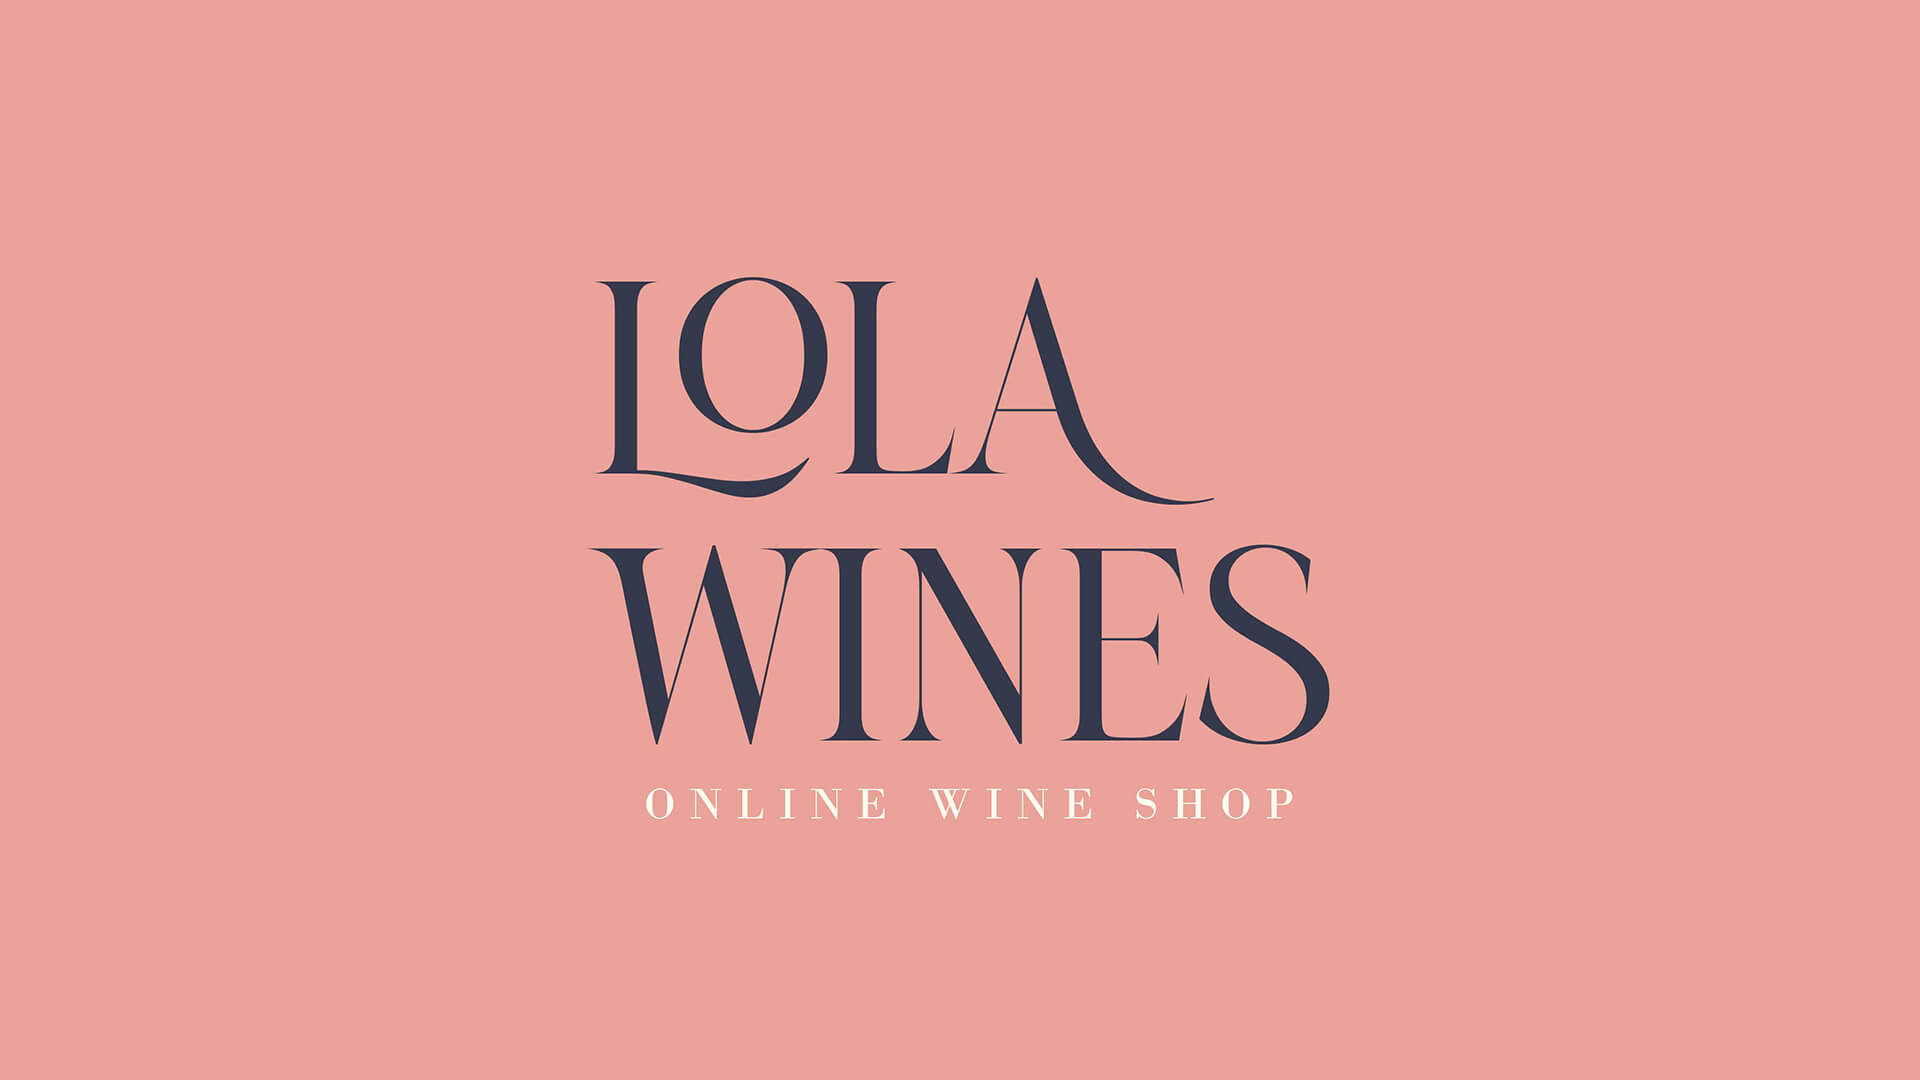 15_Lola wines_branding B